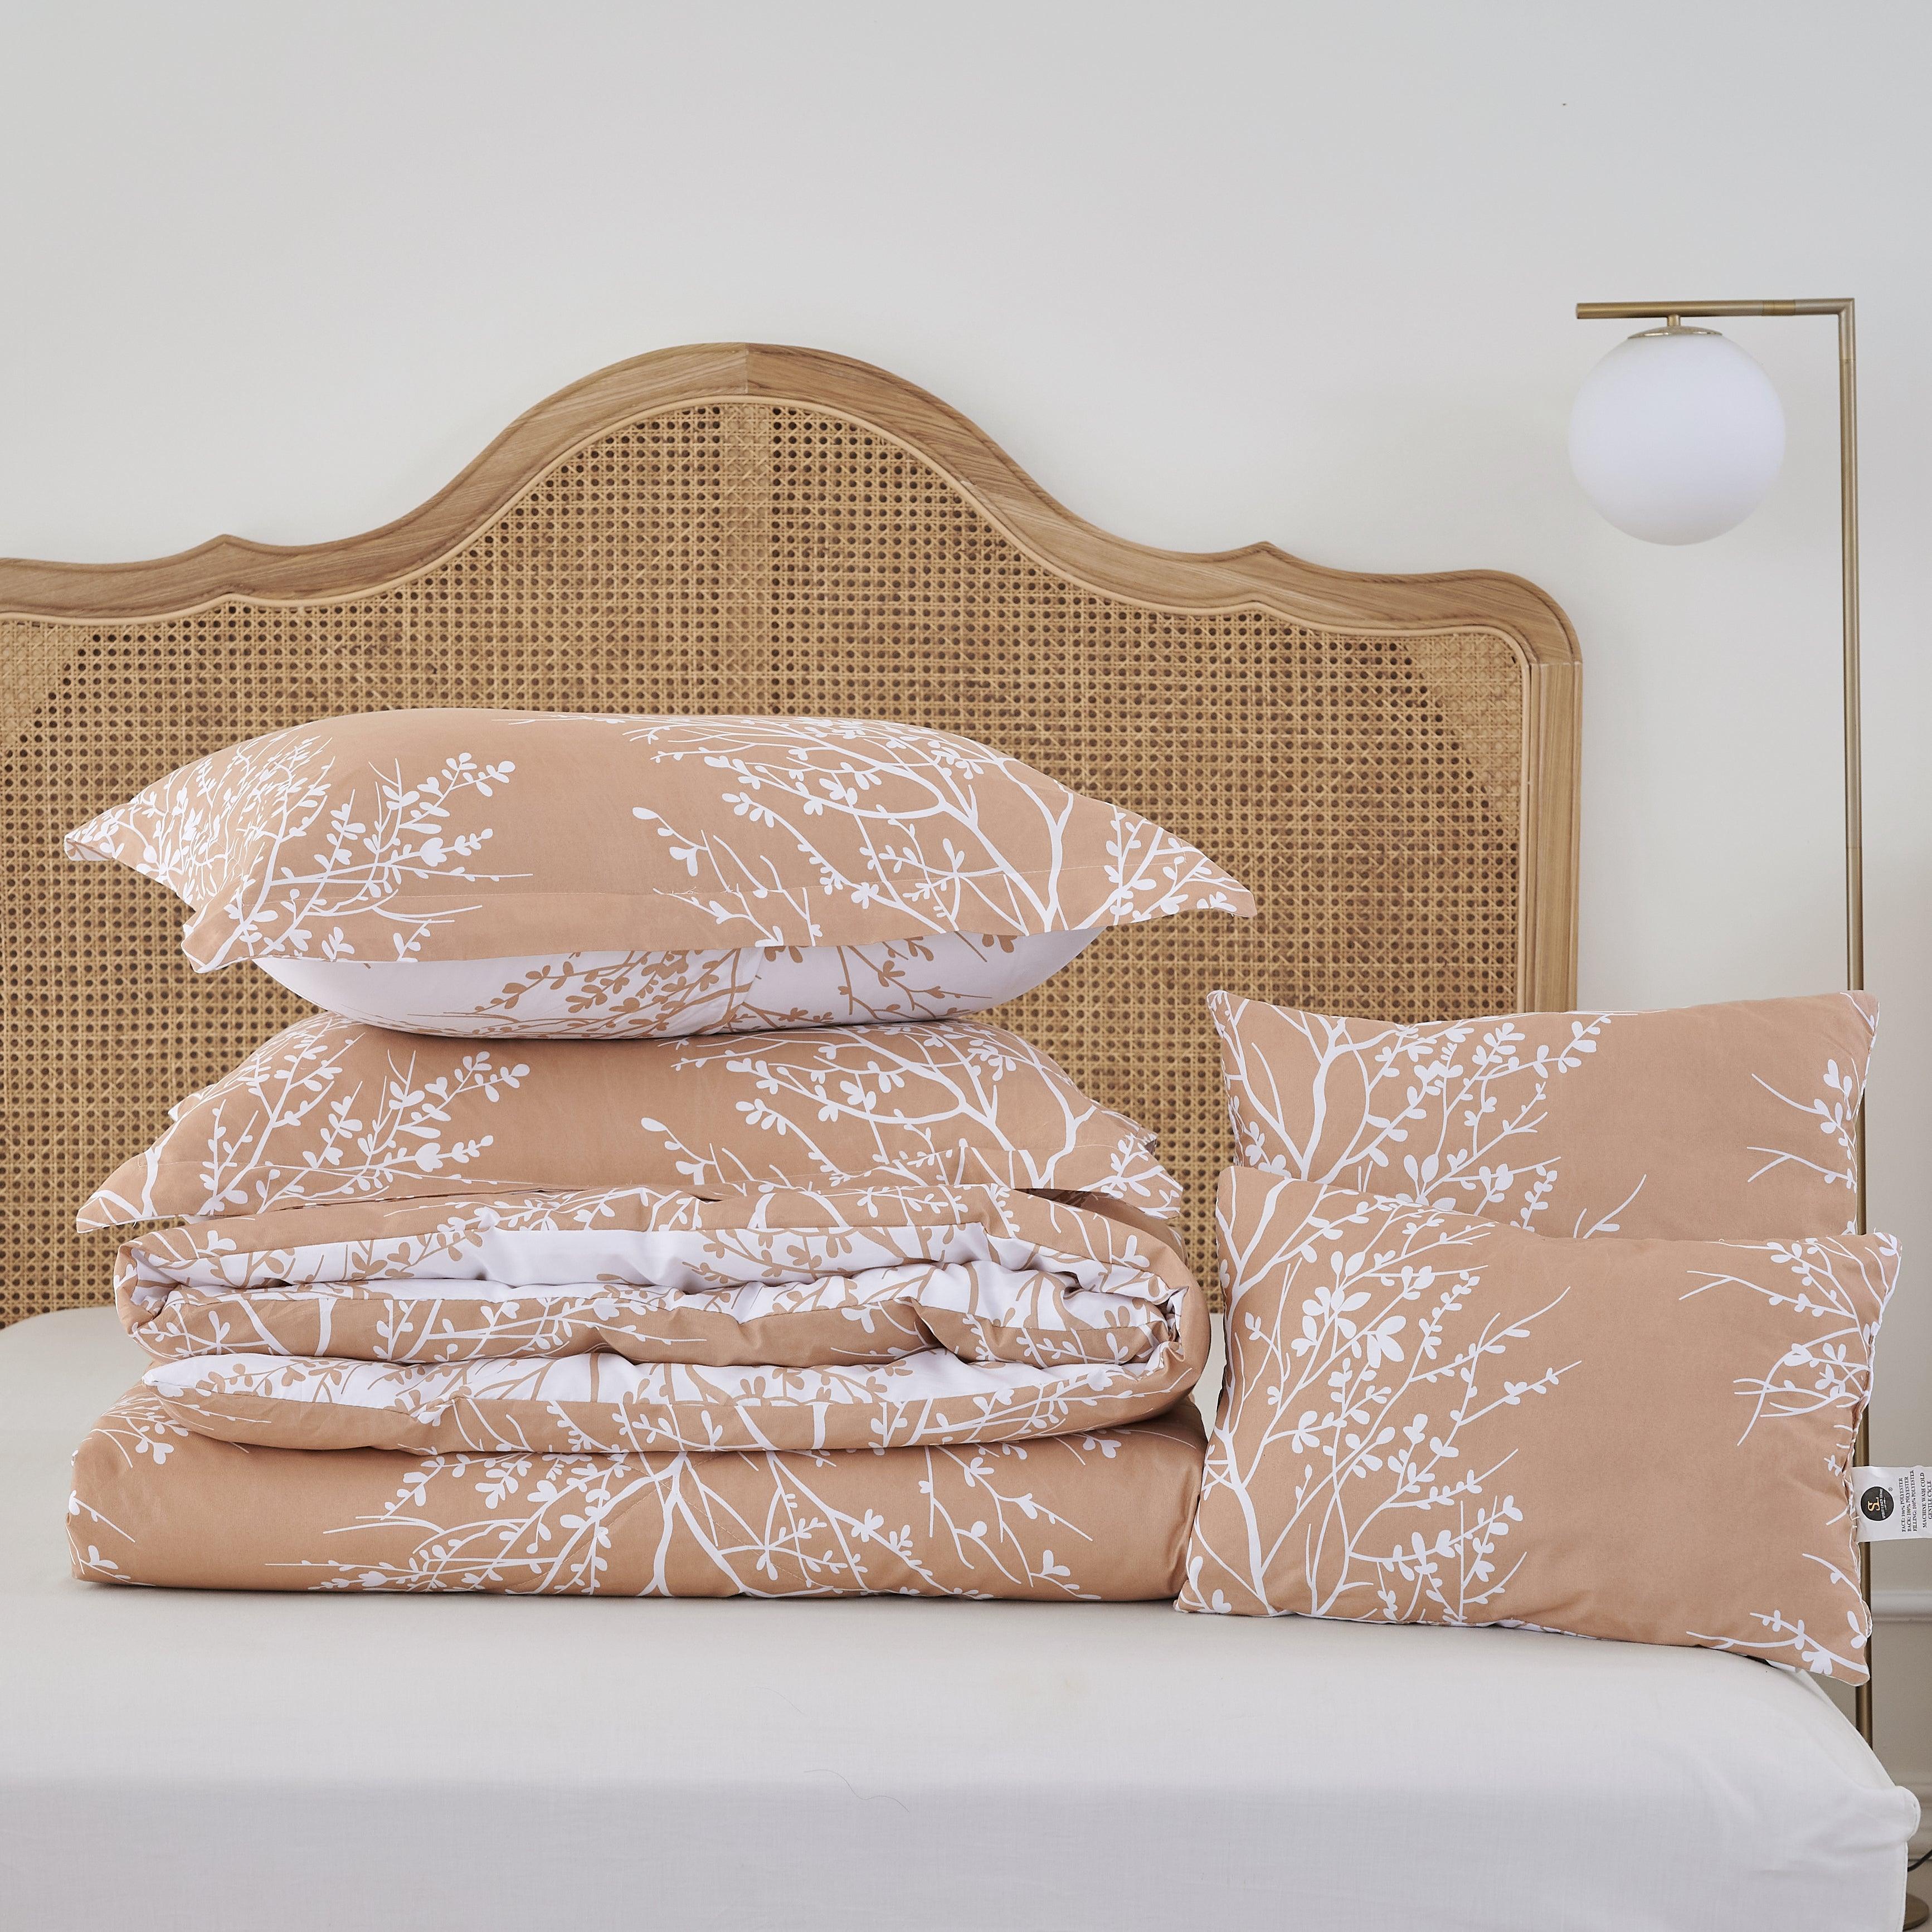 Foliage Reversible Comforter Set + Two Free Sham Pillows - Spirit Linen - Taupe